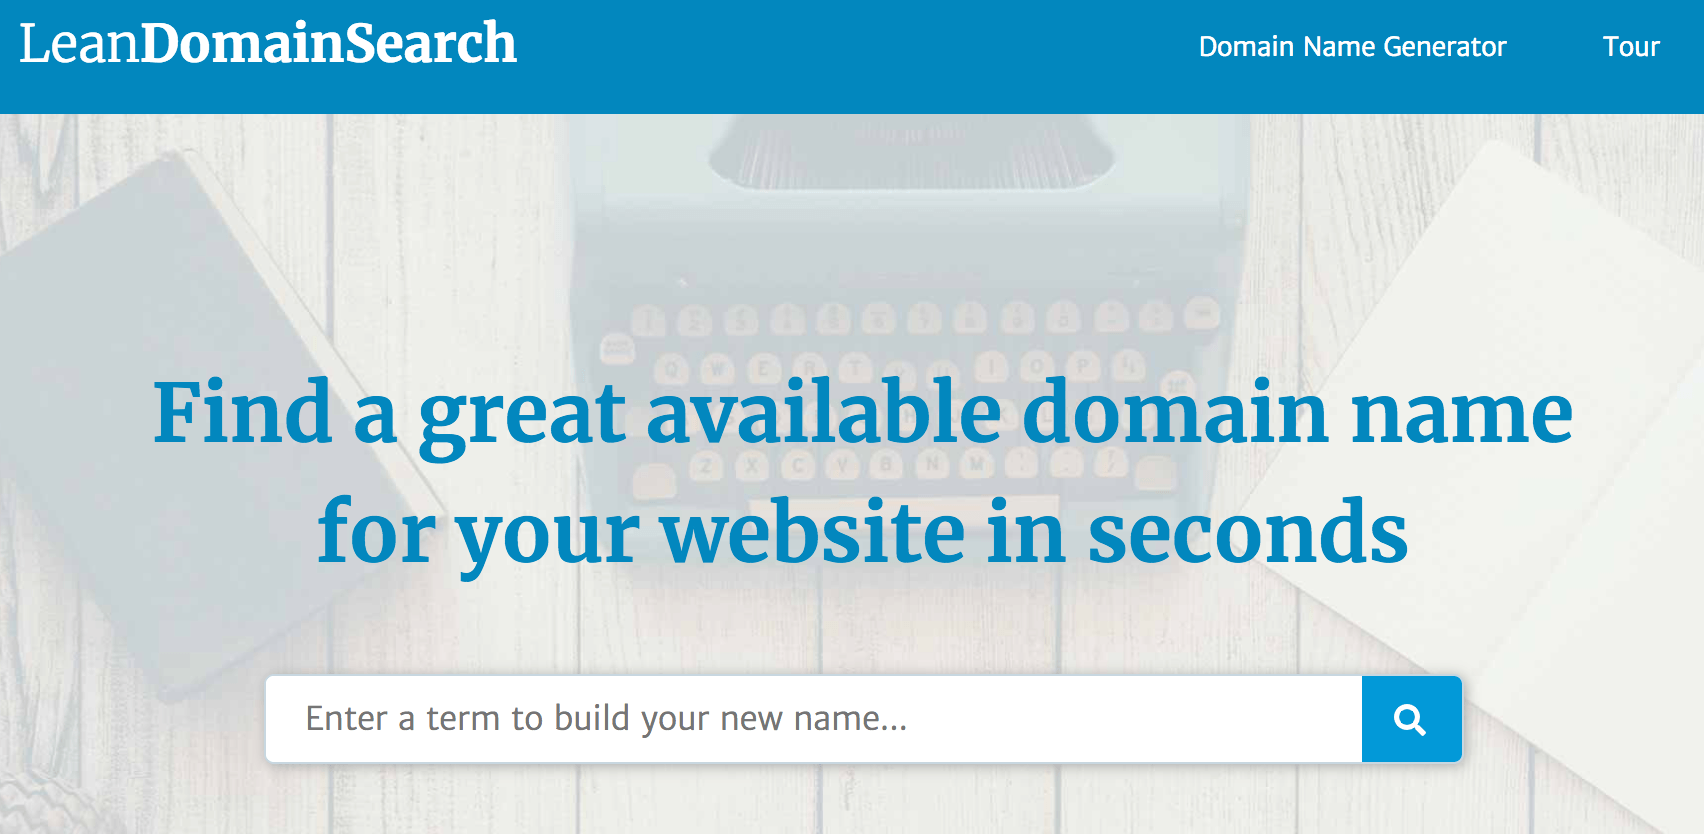 Lean Domain Search Business Name Generator